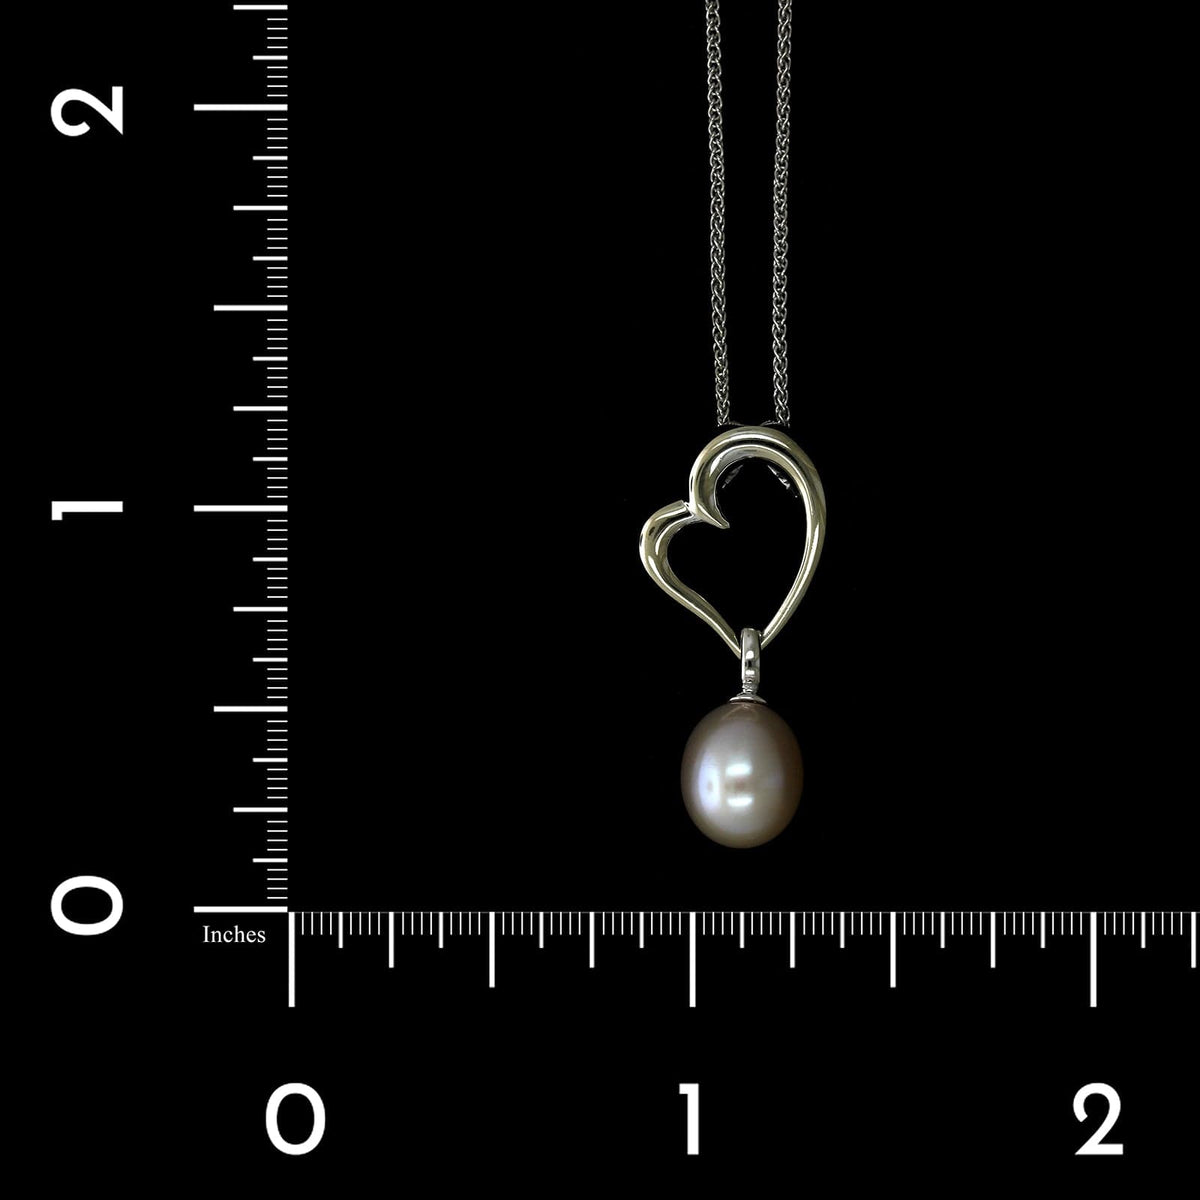 14K White Gold Estate Cultured Freshwater Pearl Heart Pendant